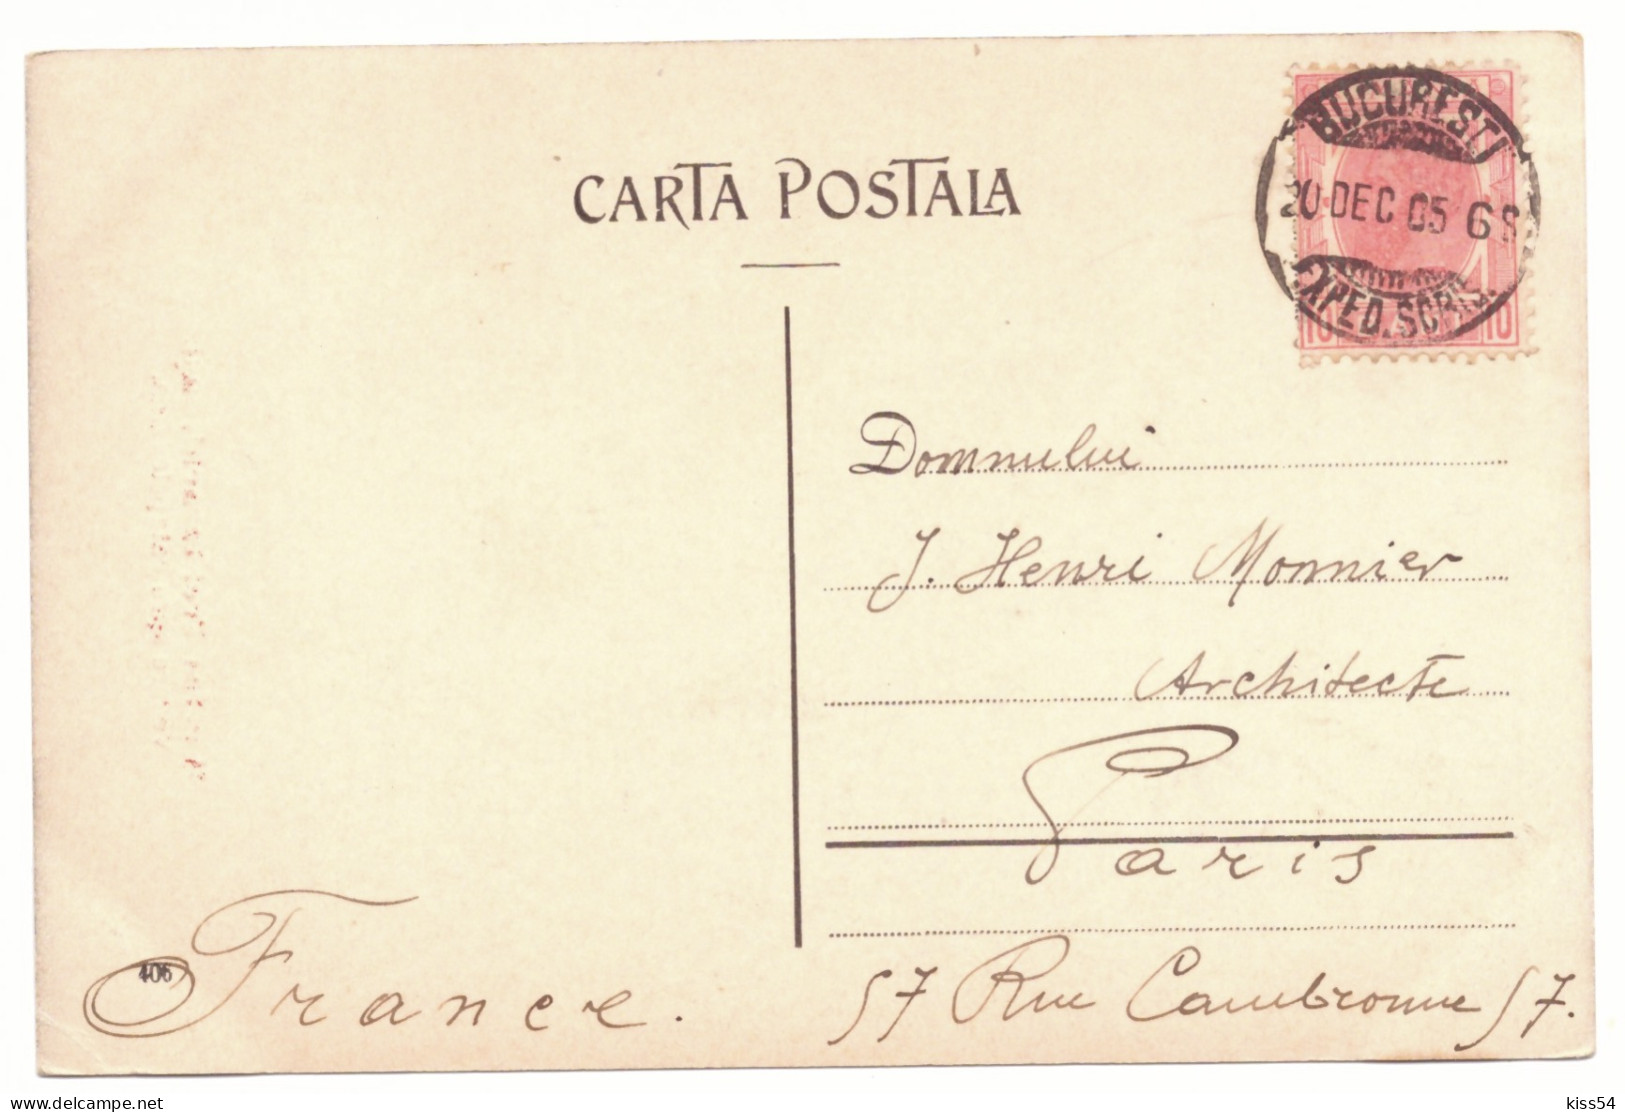 RO 09 - 21078 IASI, The Church Of TREI IERARHI, Interior, Romania - Old Postcard - Used - 1905 - Rumänien